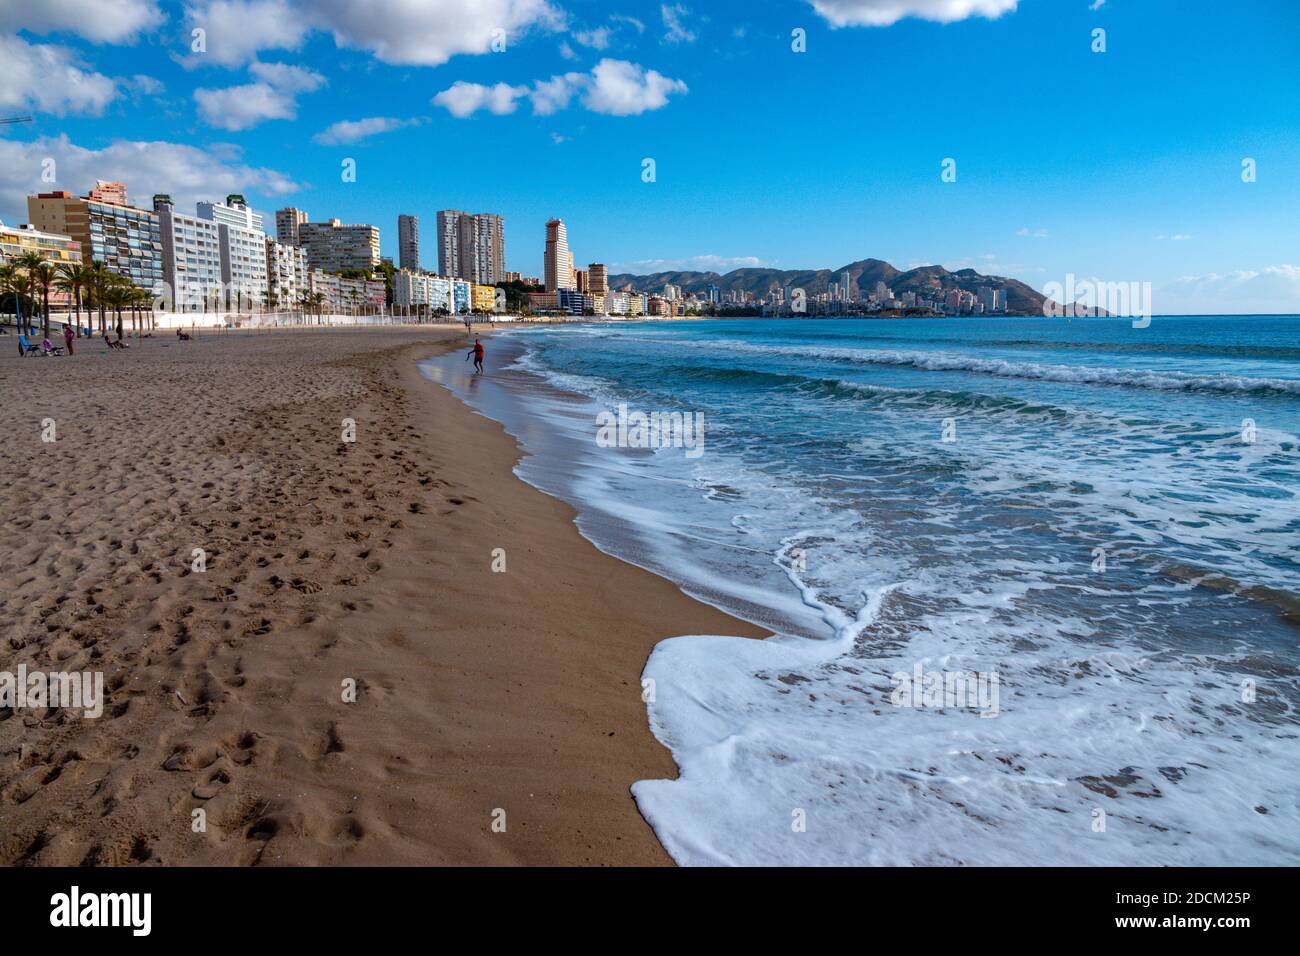 The popular holiday destination and winter sun venue of Benidorm, Costa Blanca, Spain Stock Photo